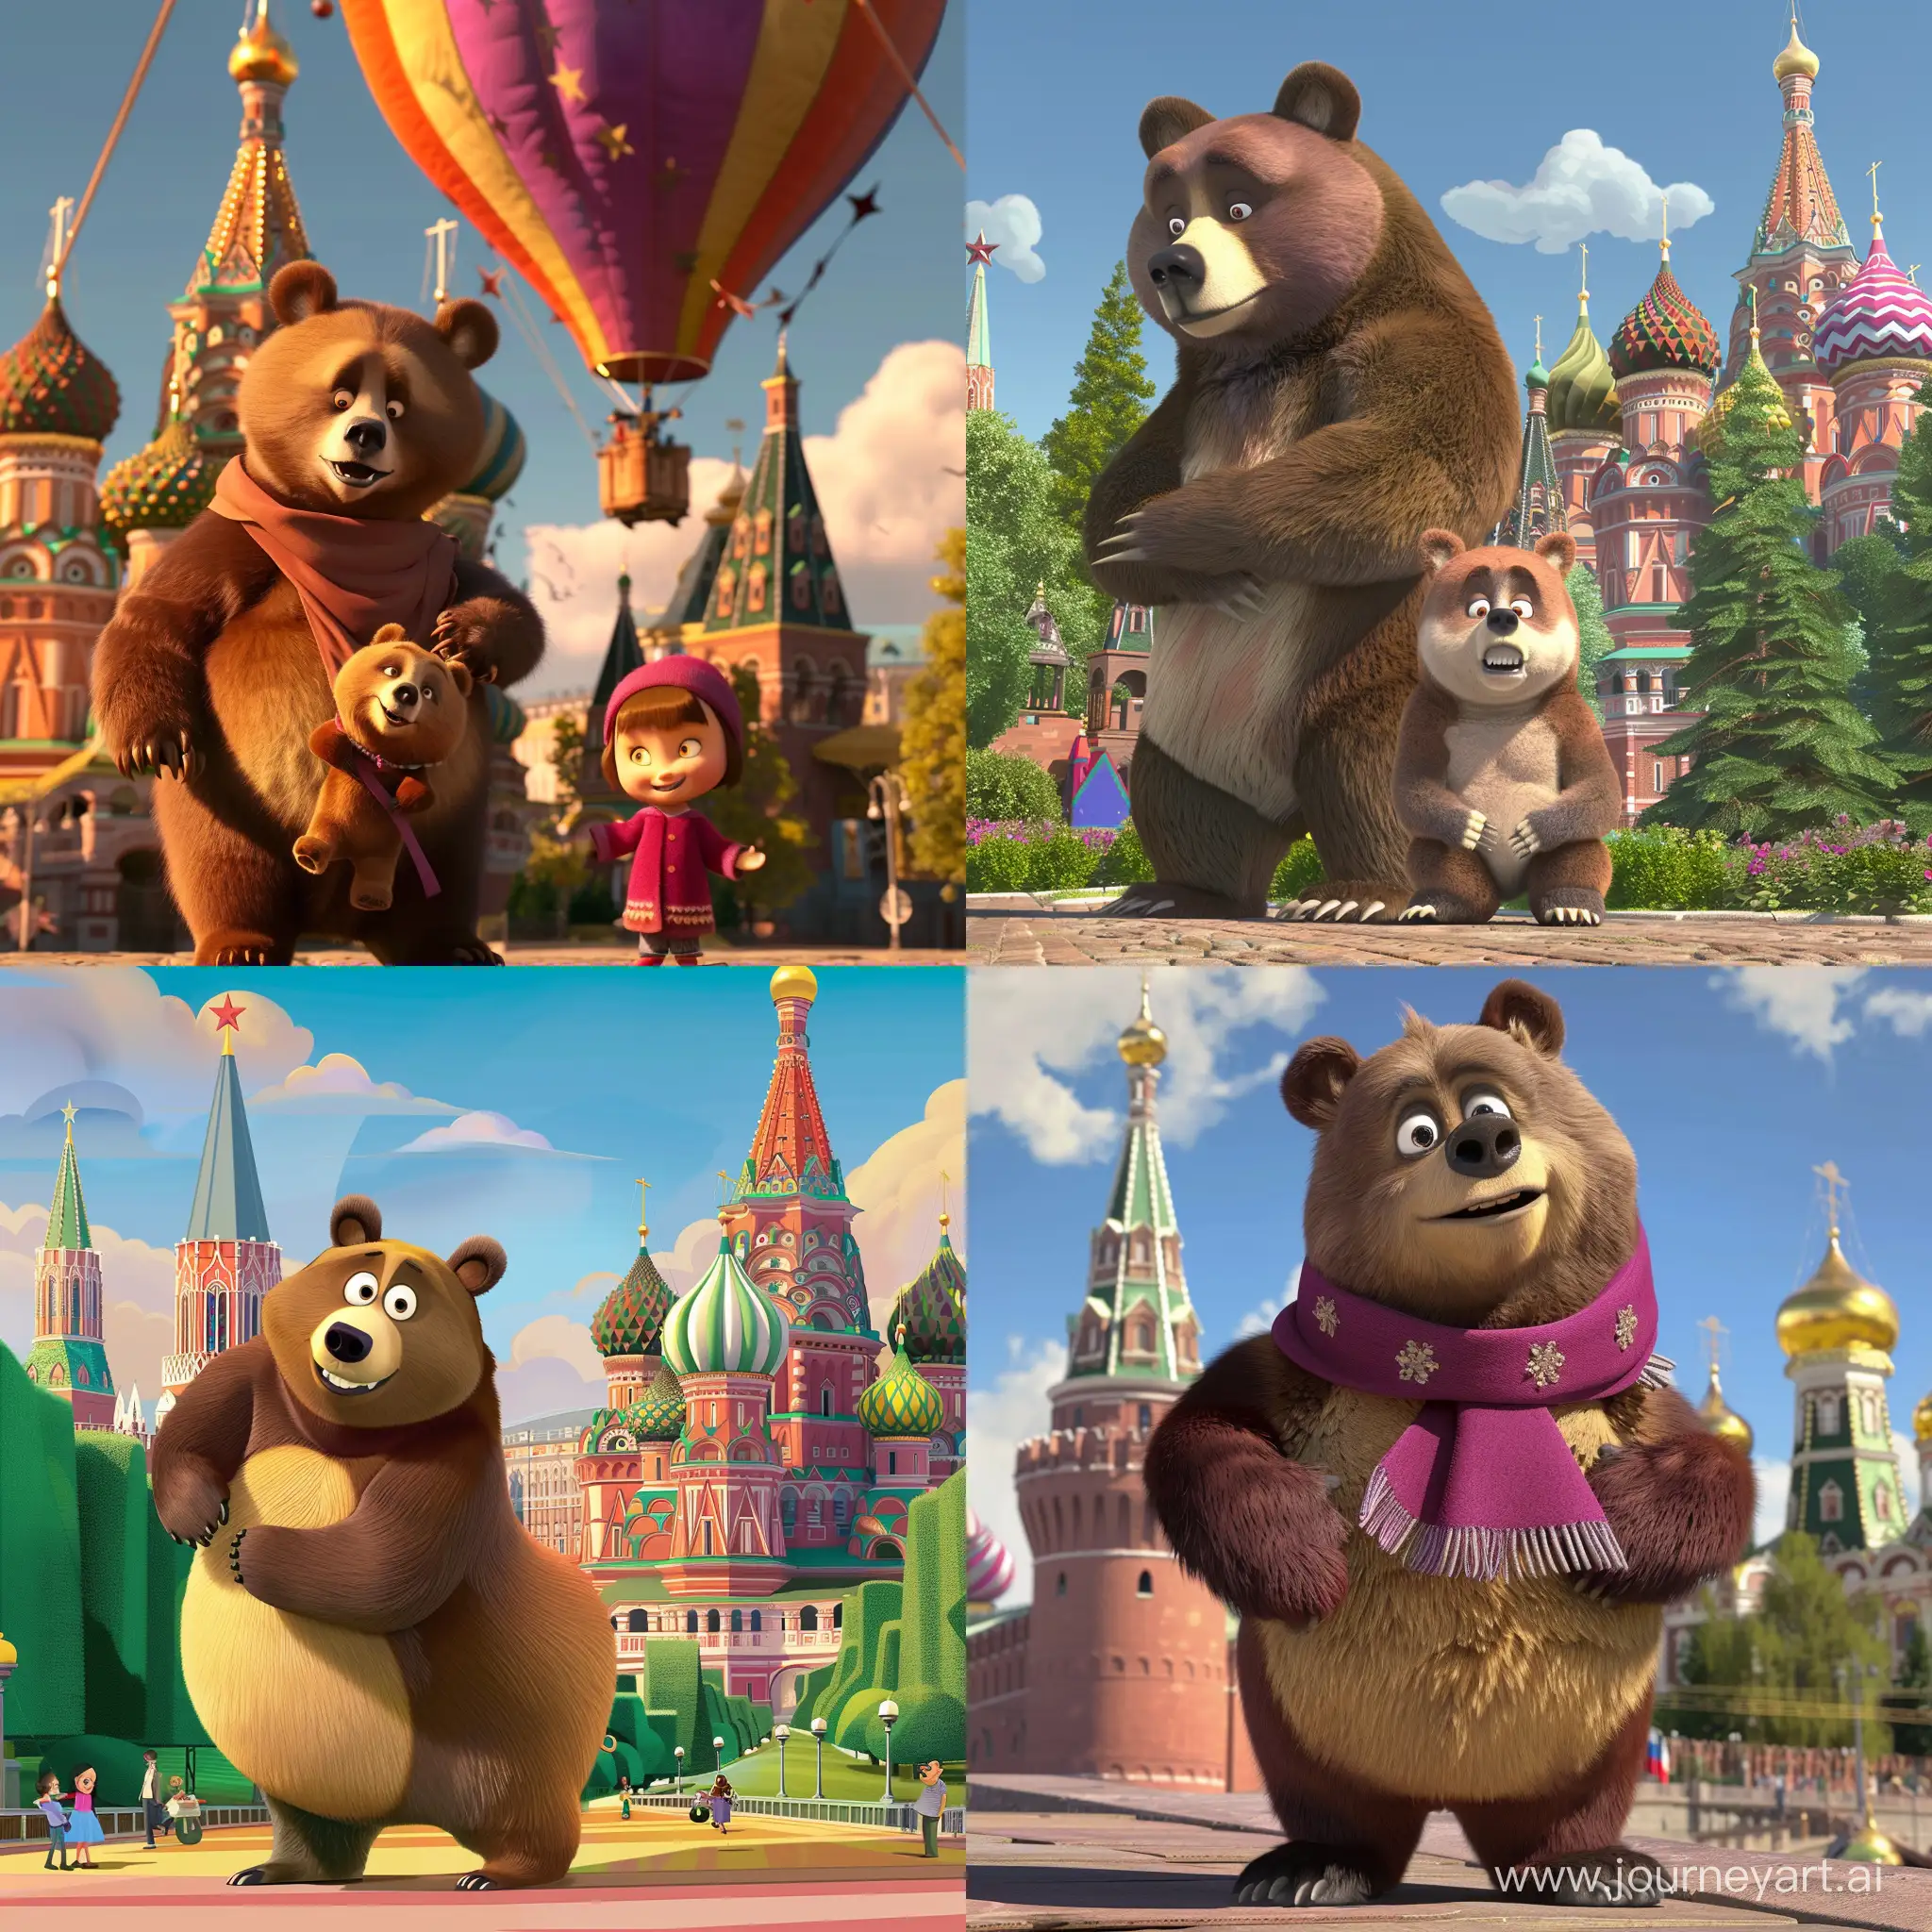 Moscow-Cityscape-with-Masha-and-the-Bear-Cartoon-Theme